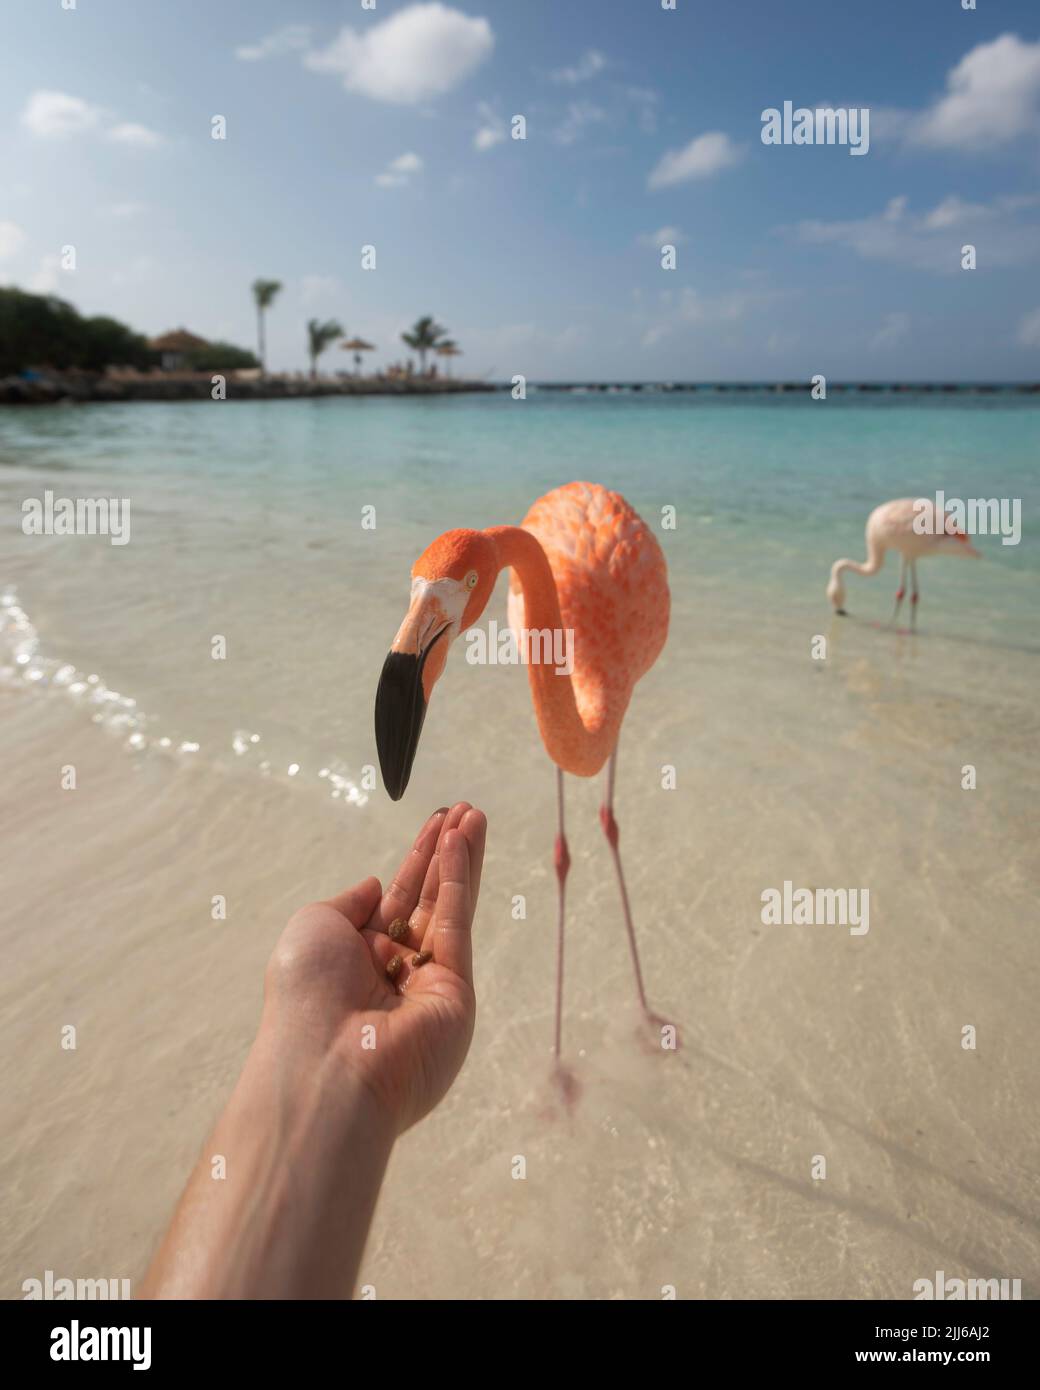 Feeding a dark pink flamingo on Flamingo Beach in Aruba during a bright, sunny day. Stock Photo